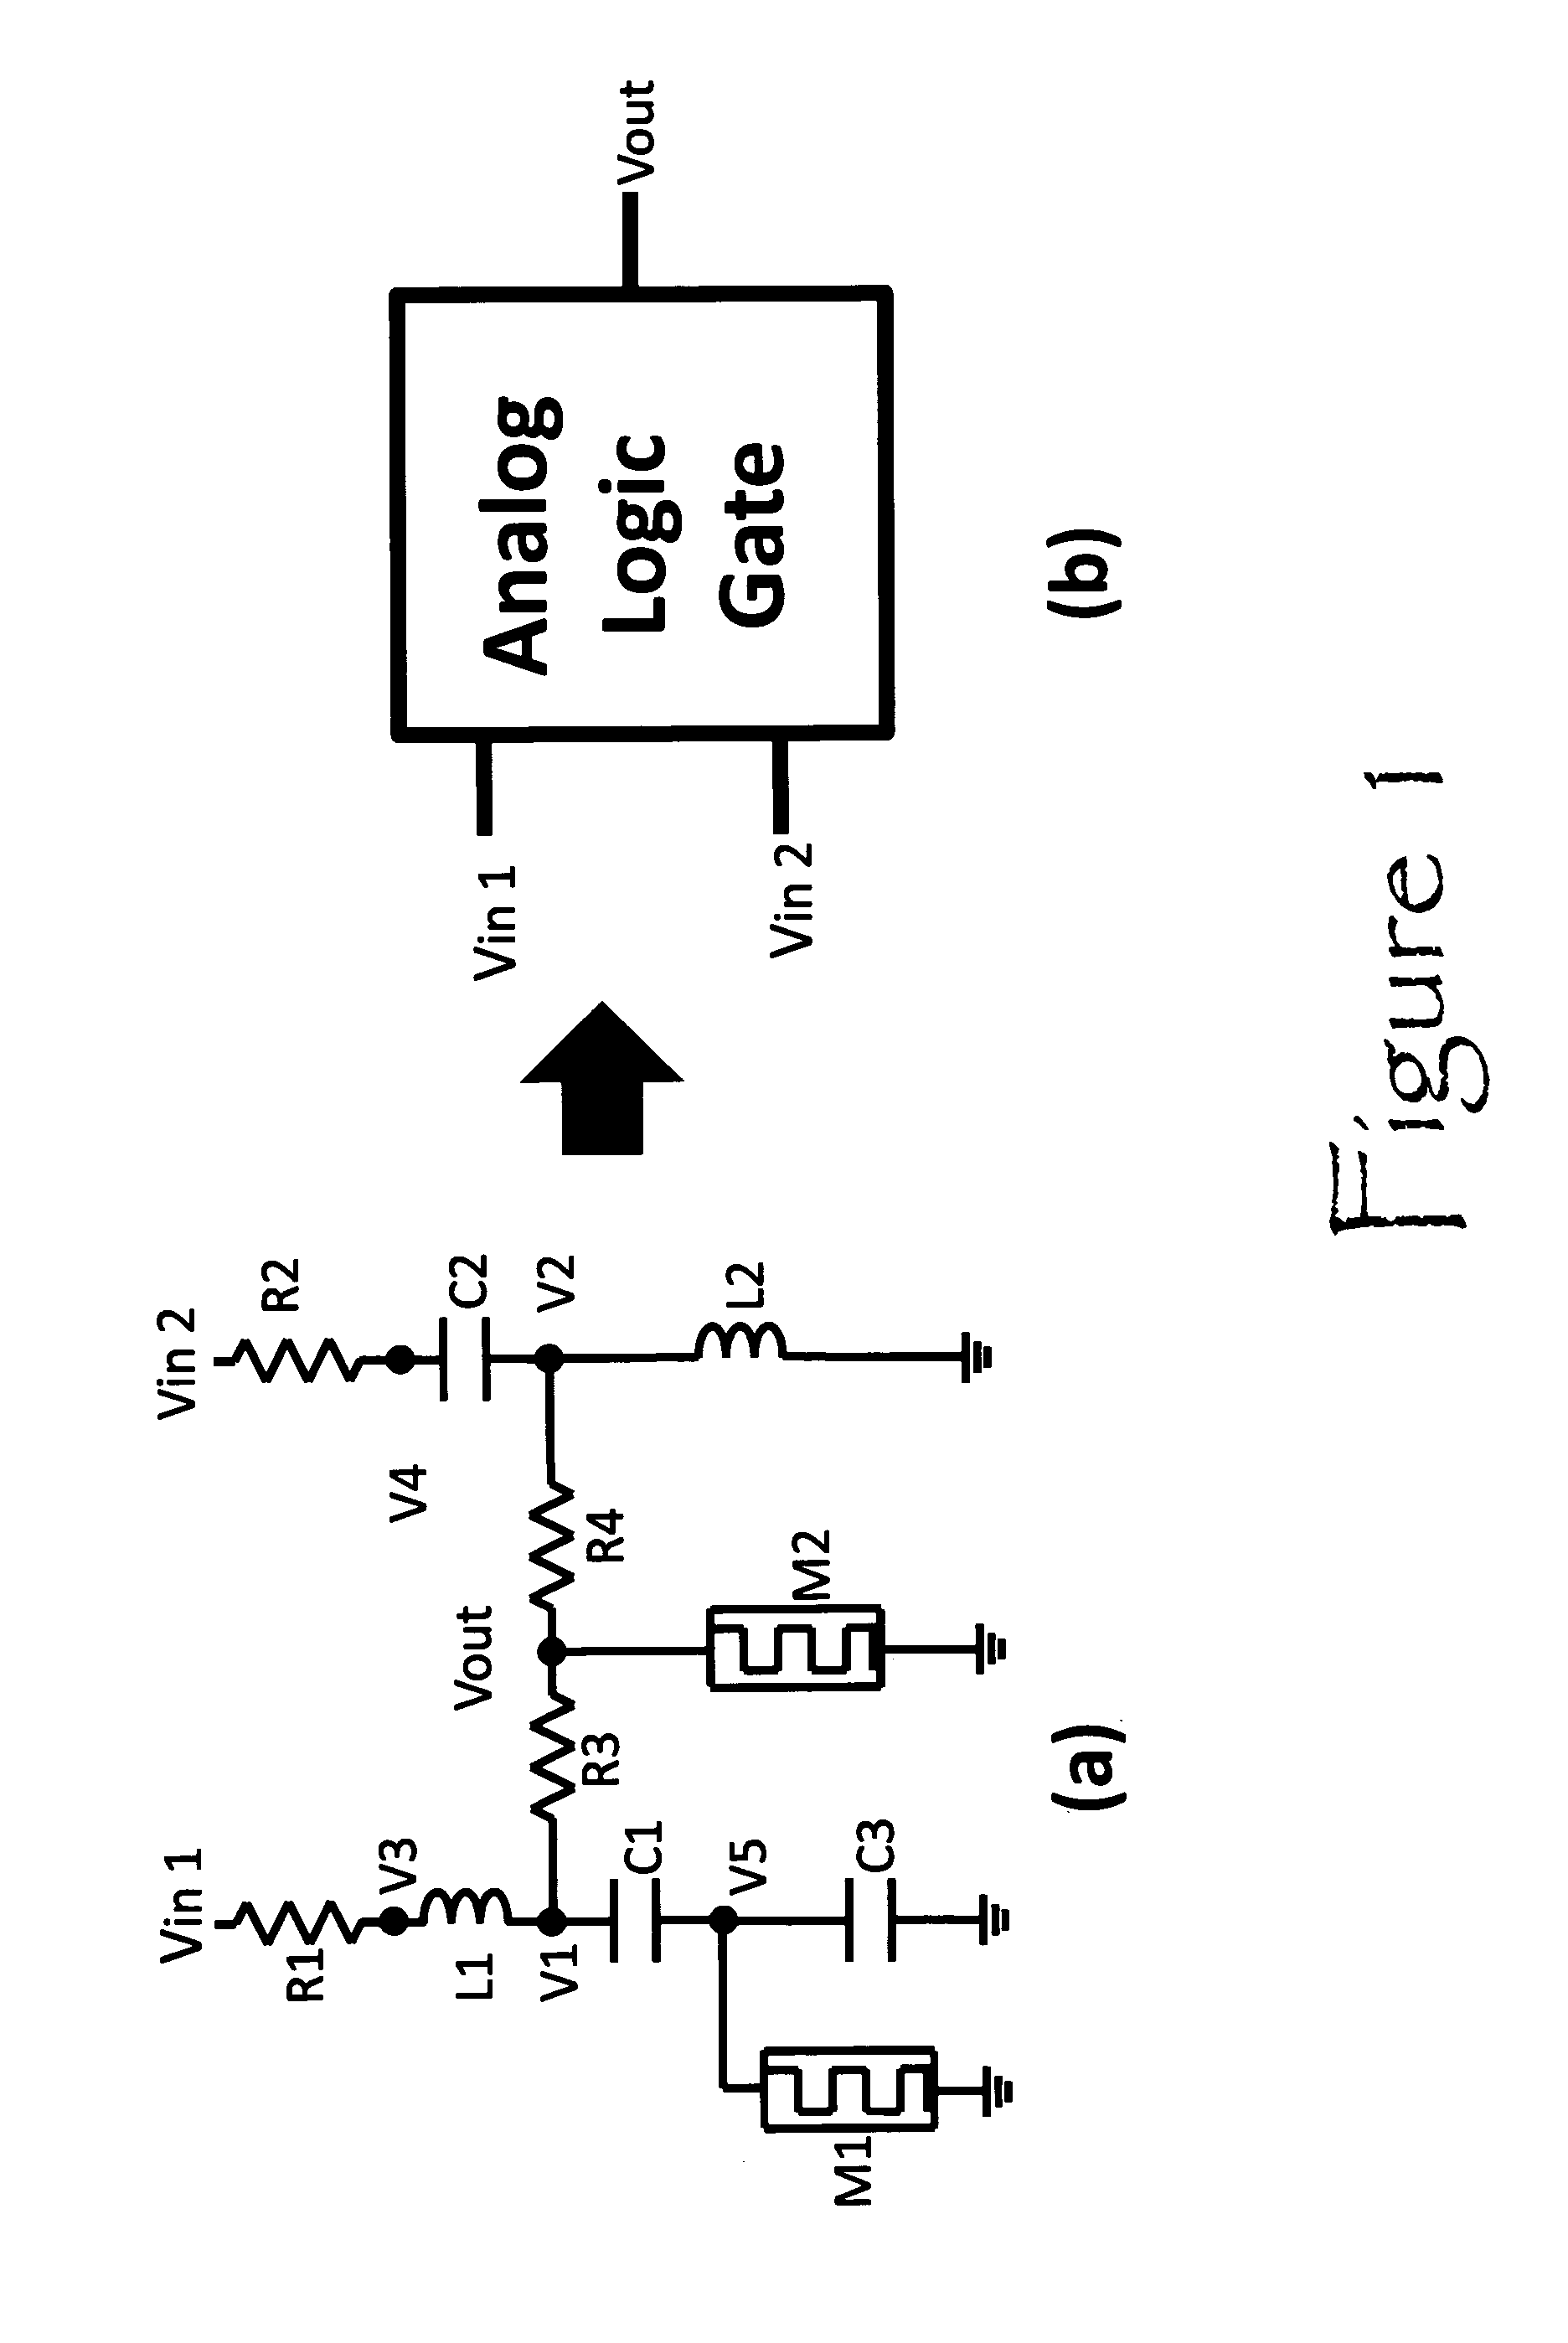 Self-reconfigurable memristor-based analog resonant computer